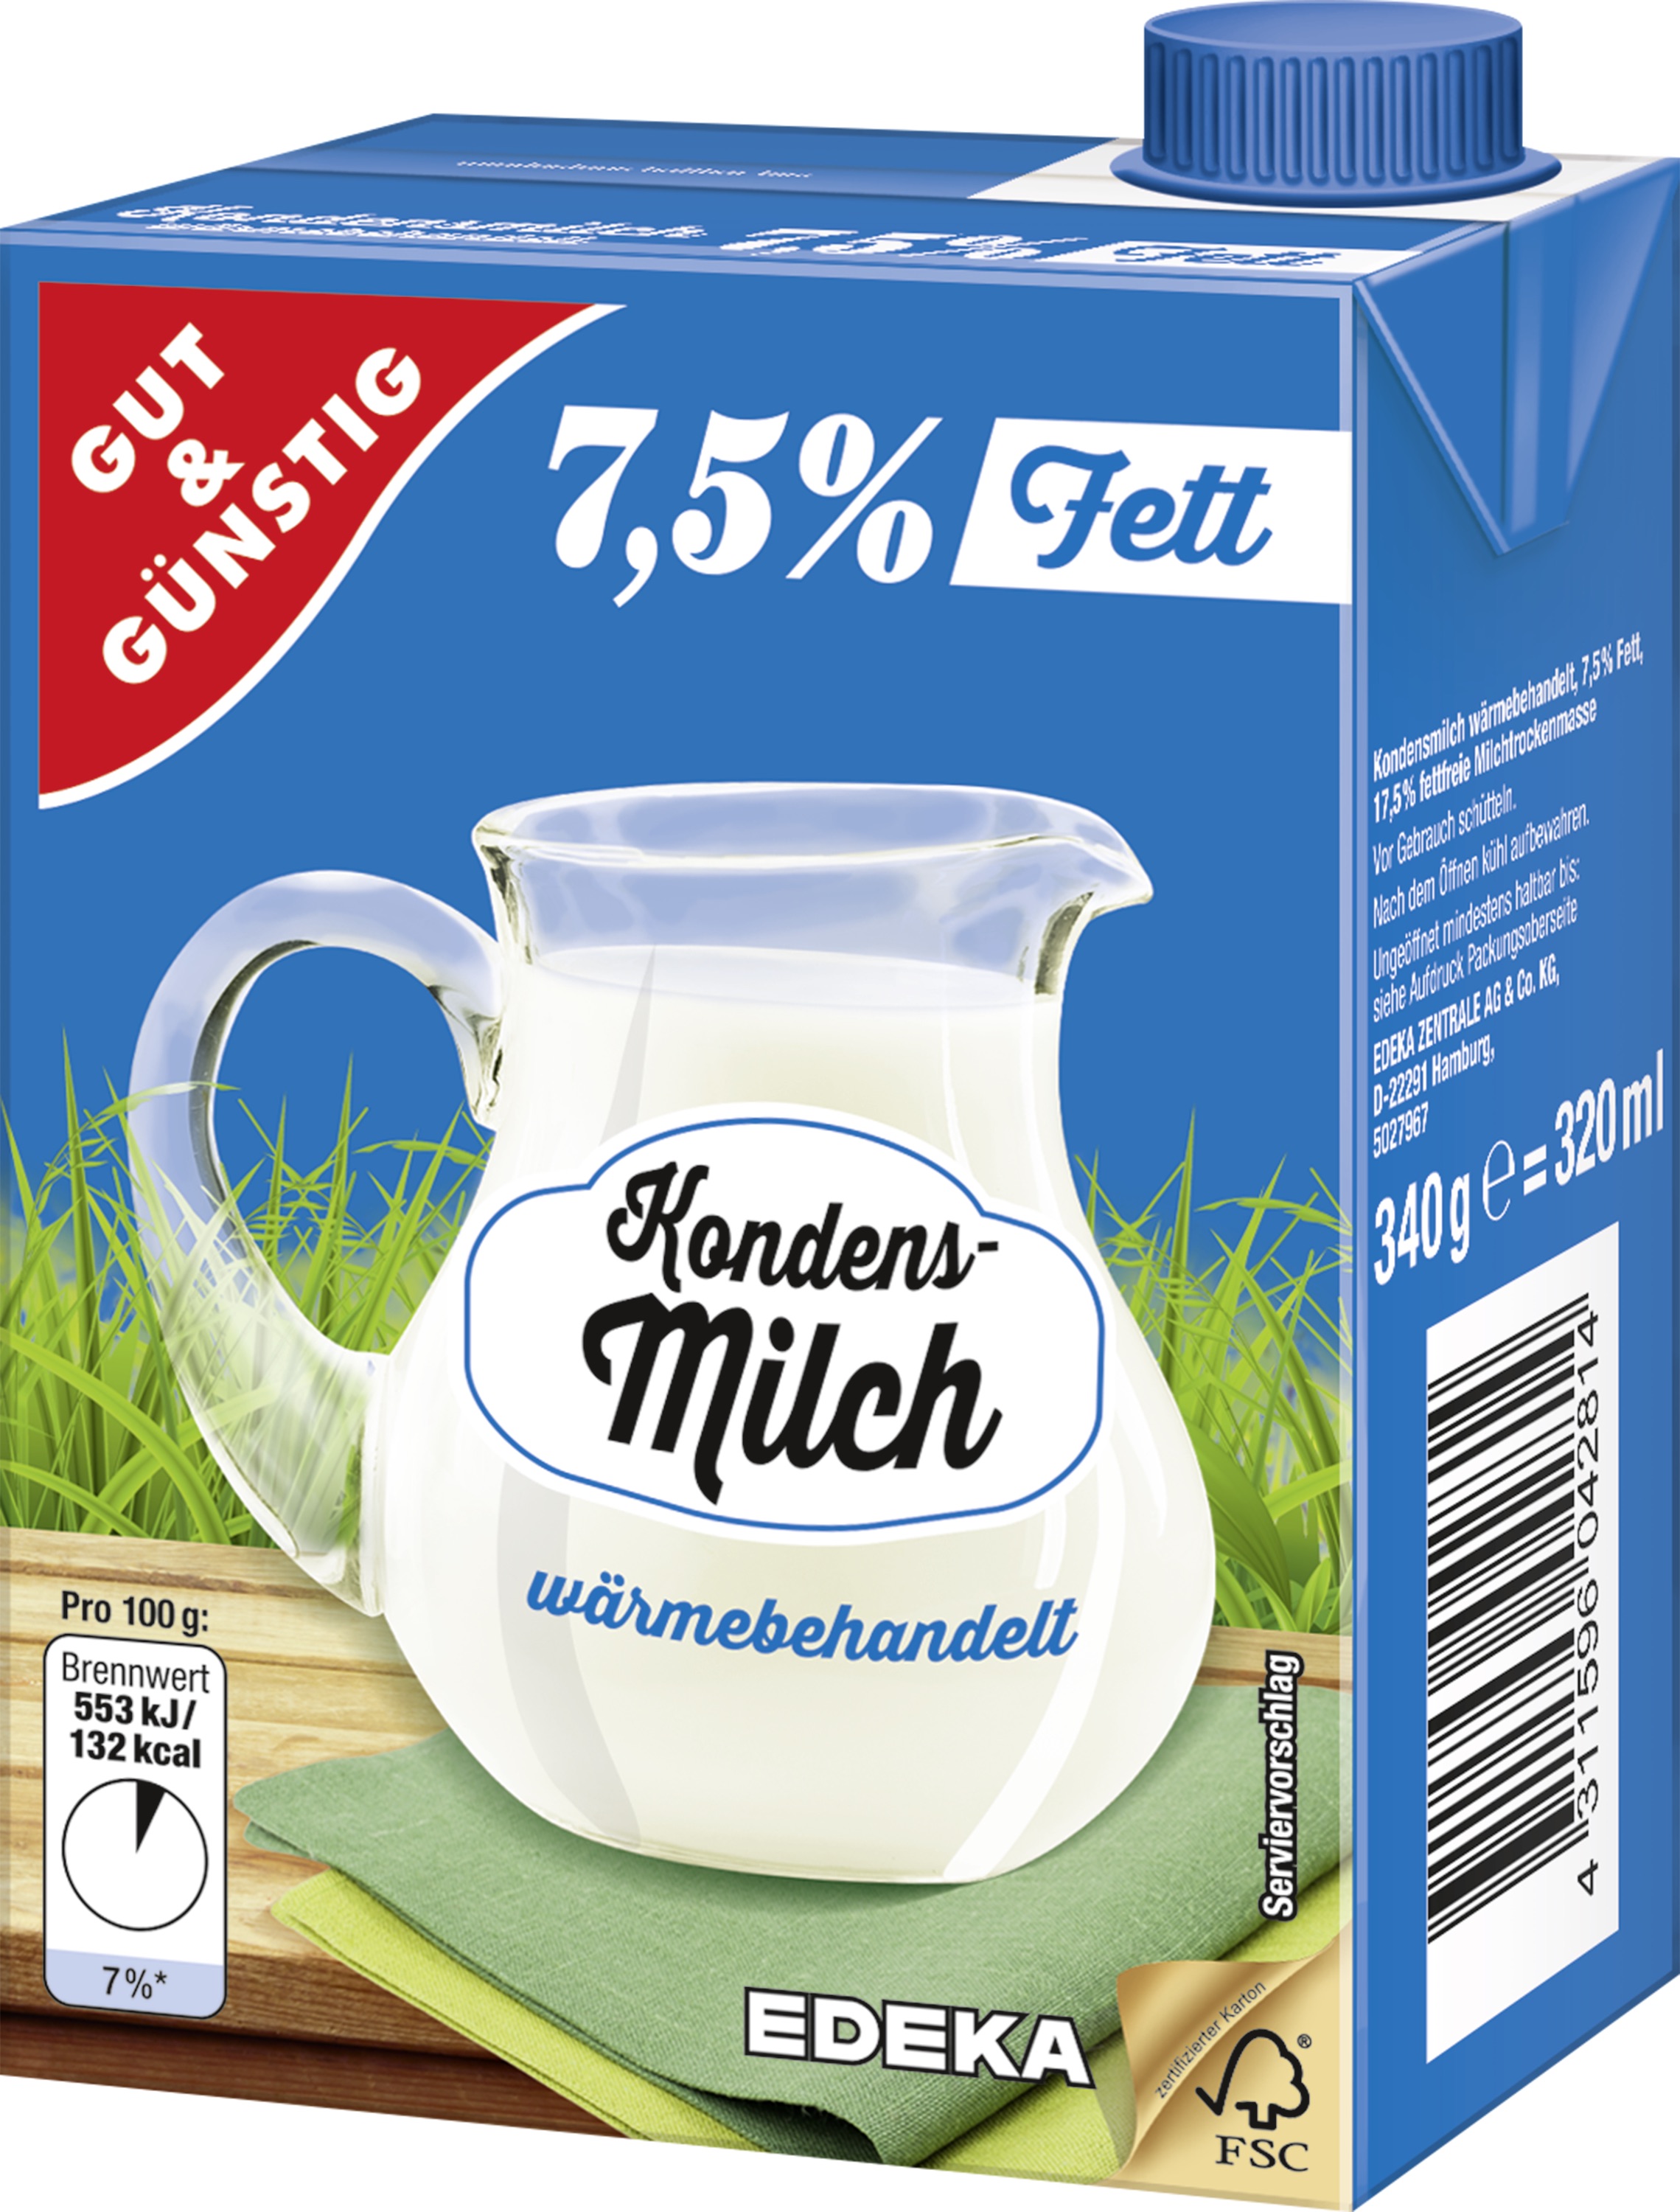 G&G Kondensmilch 7,5% 340g EW